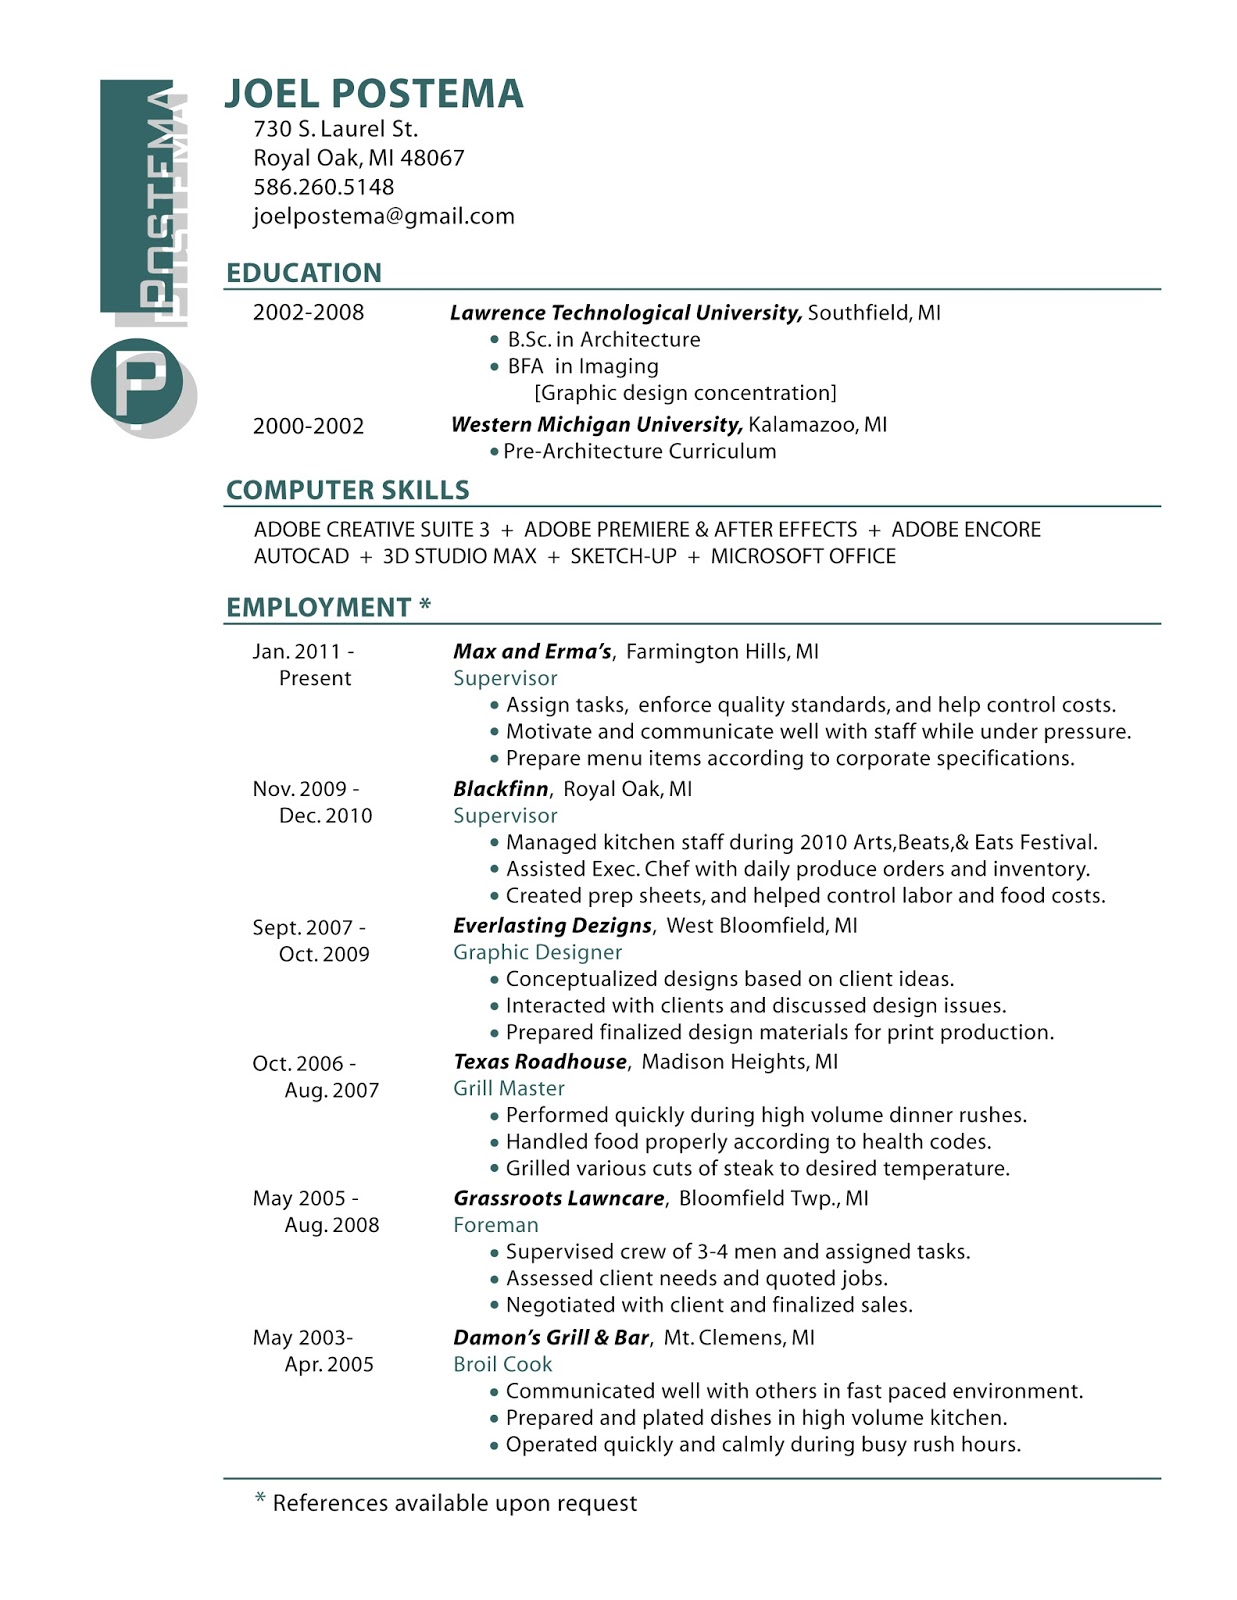 Sample resume for graphic designer job